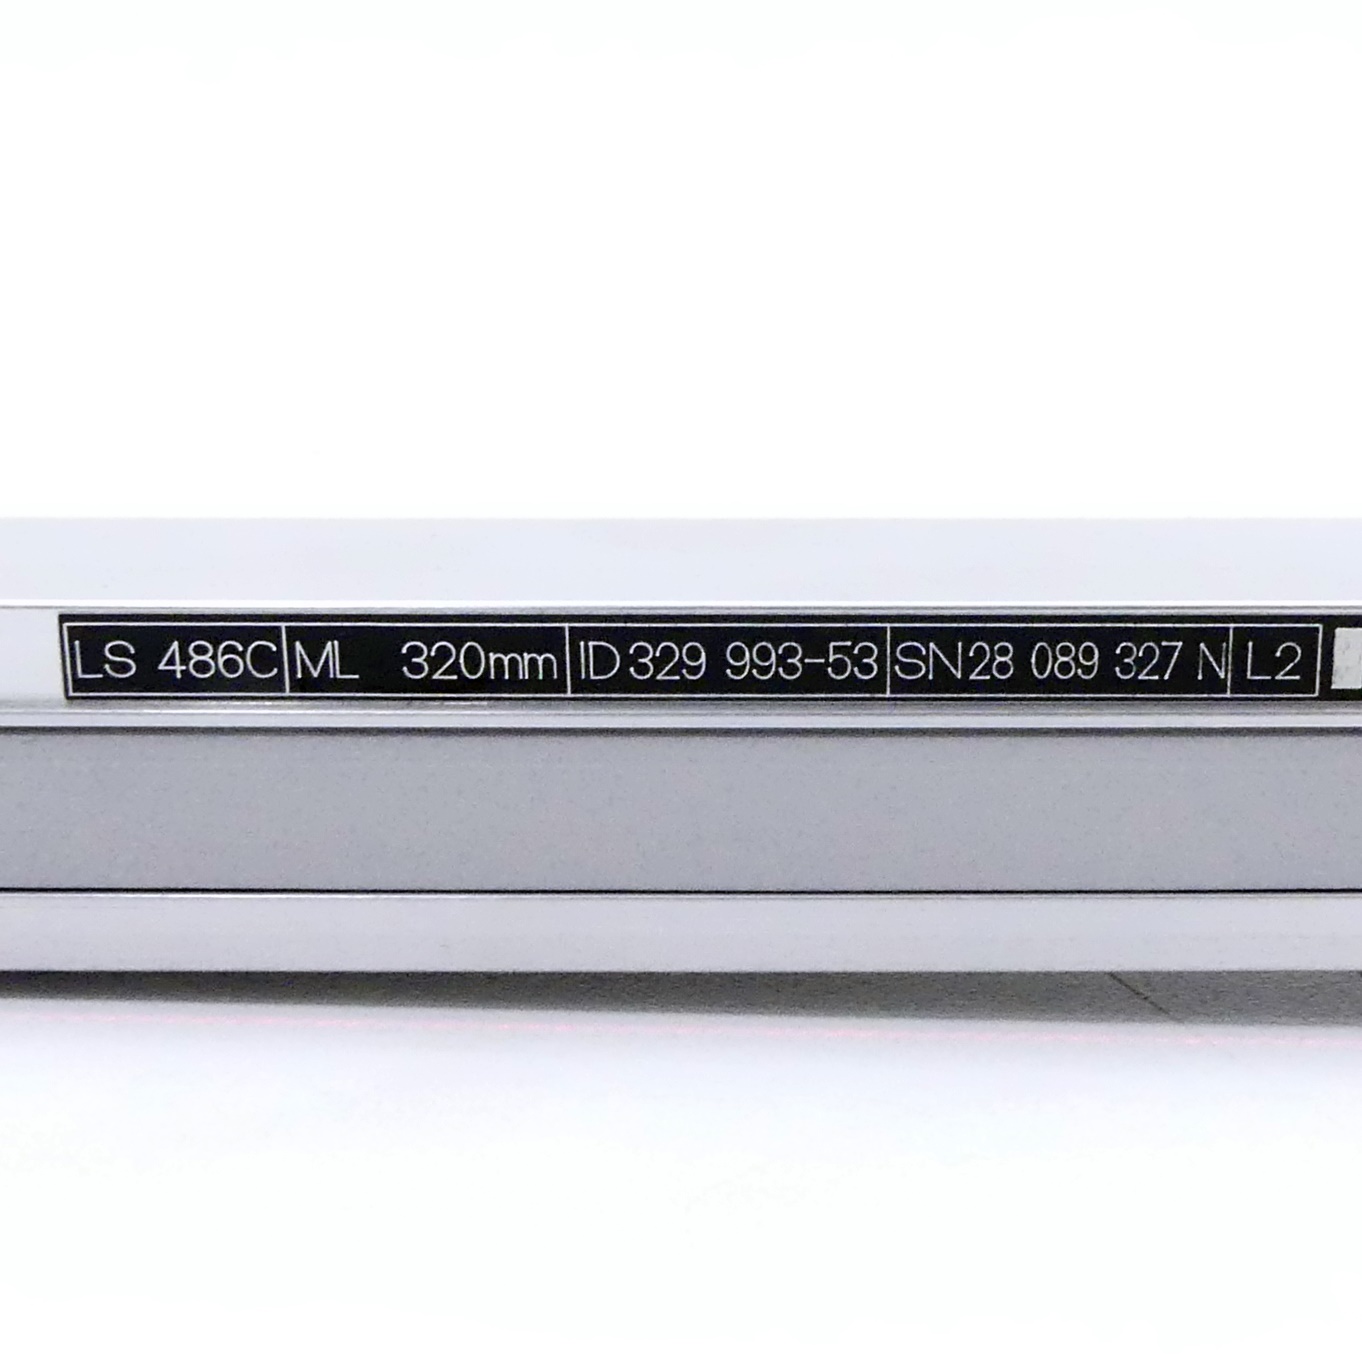 Length measuring device LS 486C ML 320 mm 